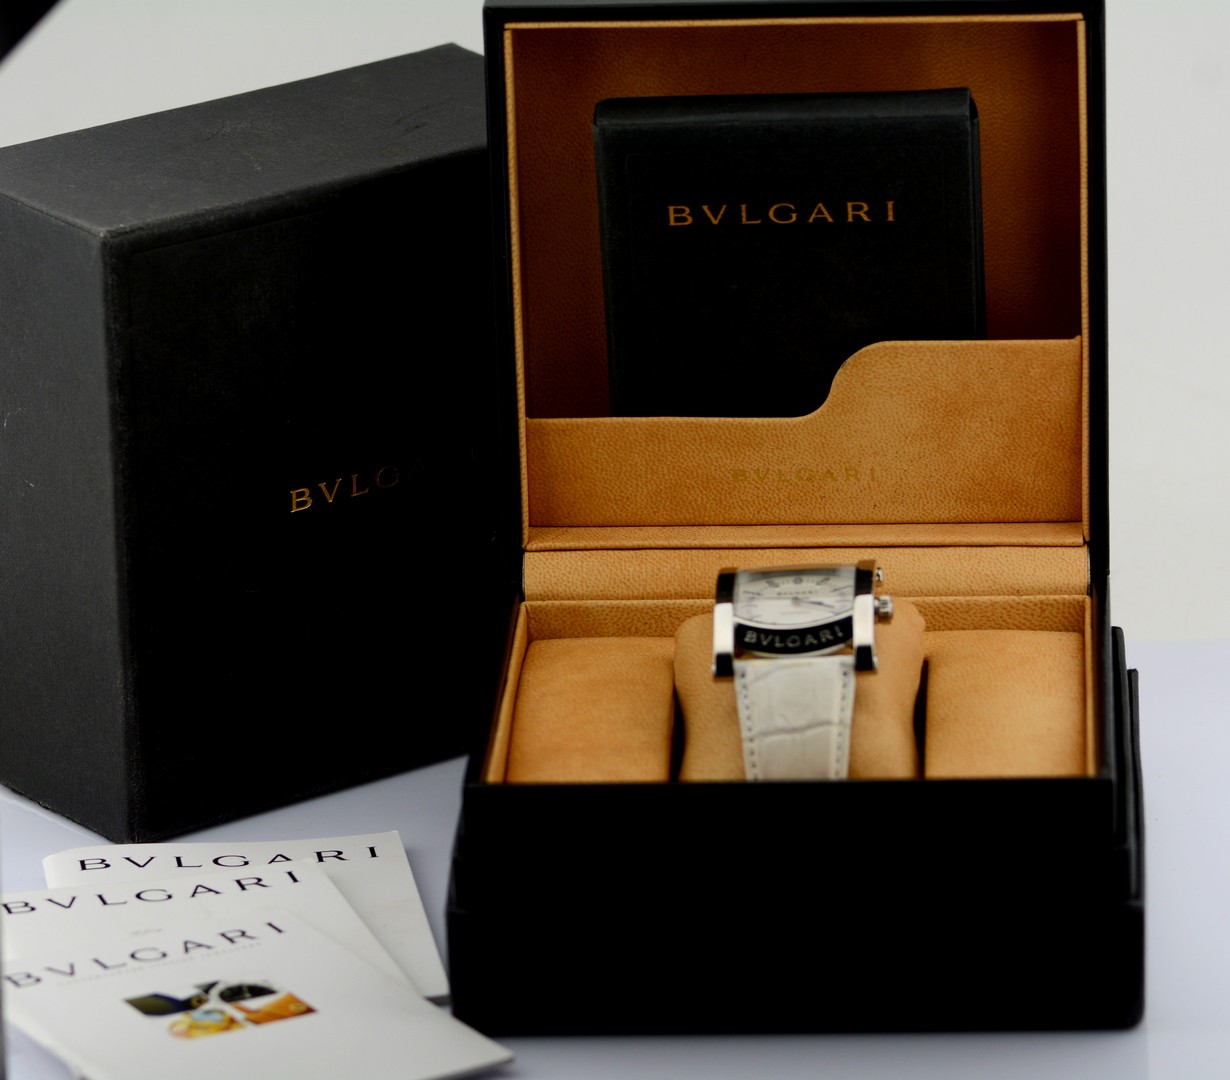 Bvlgari / AA44S Diamond Mother of pearl dial - Gentlmen's Steel Wrist Watch - Image 11 of 11